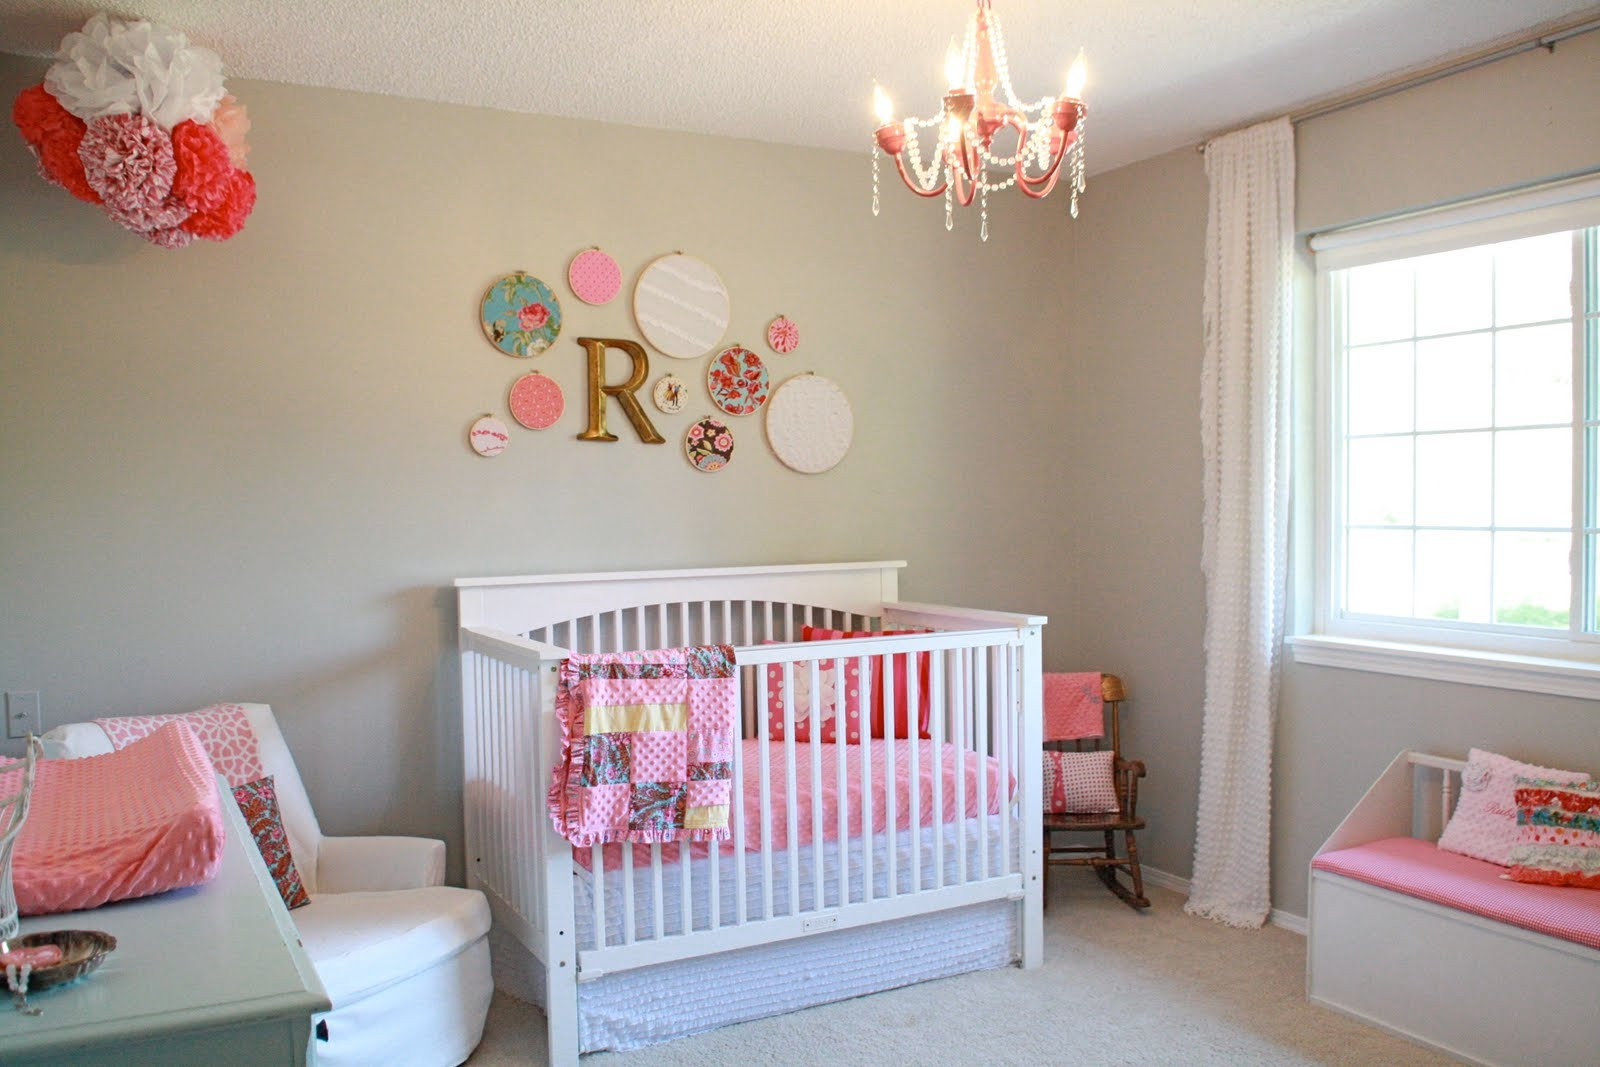 Walmart Baby Room Decor
 Butterfly Nursery Ideas Stickers For Bedroom Walls Erfly